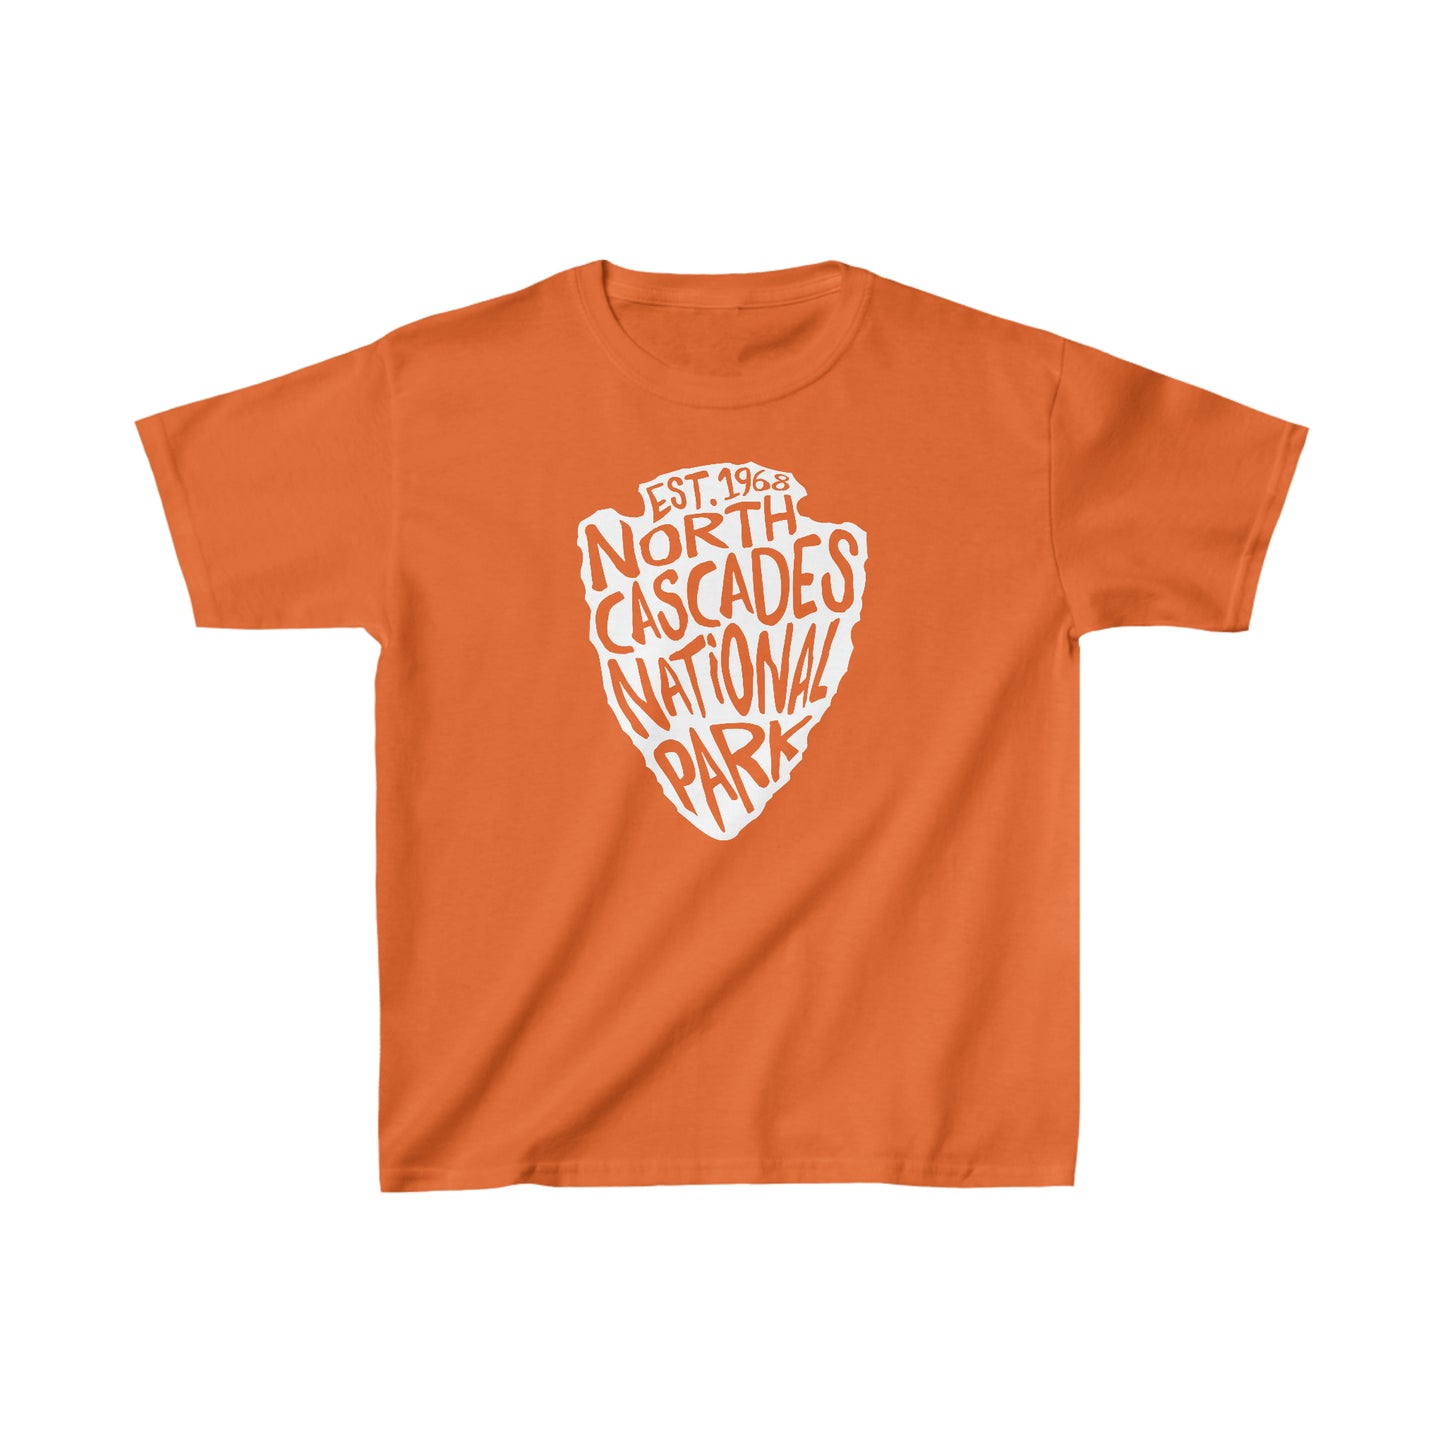 North Cascades National Park Child T-Shirt - Arrowhead Design